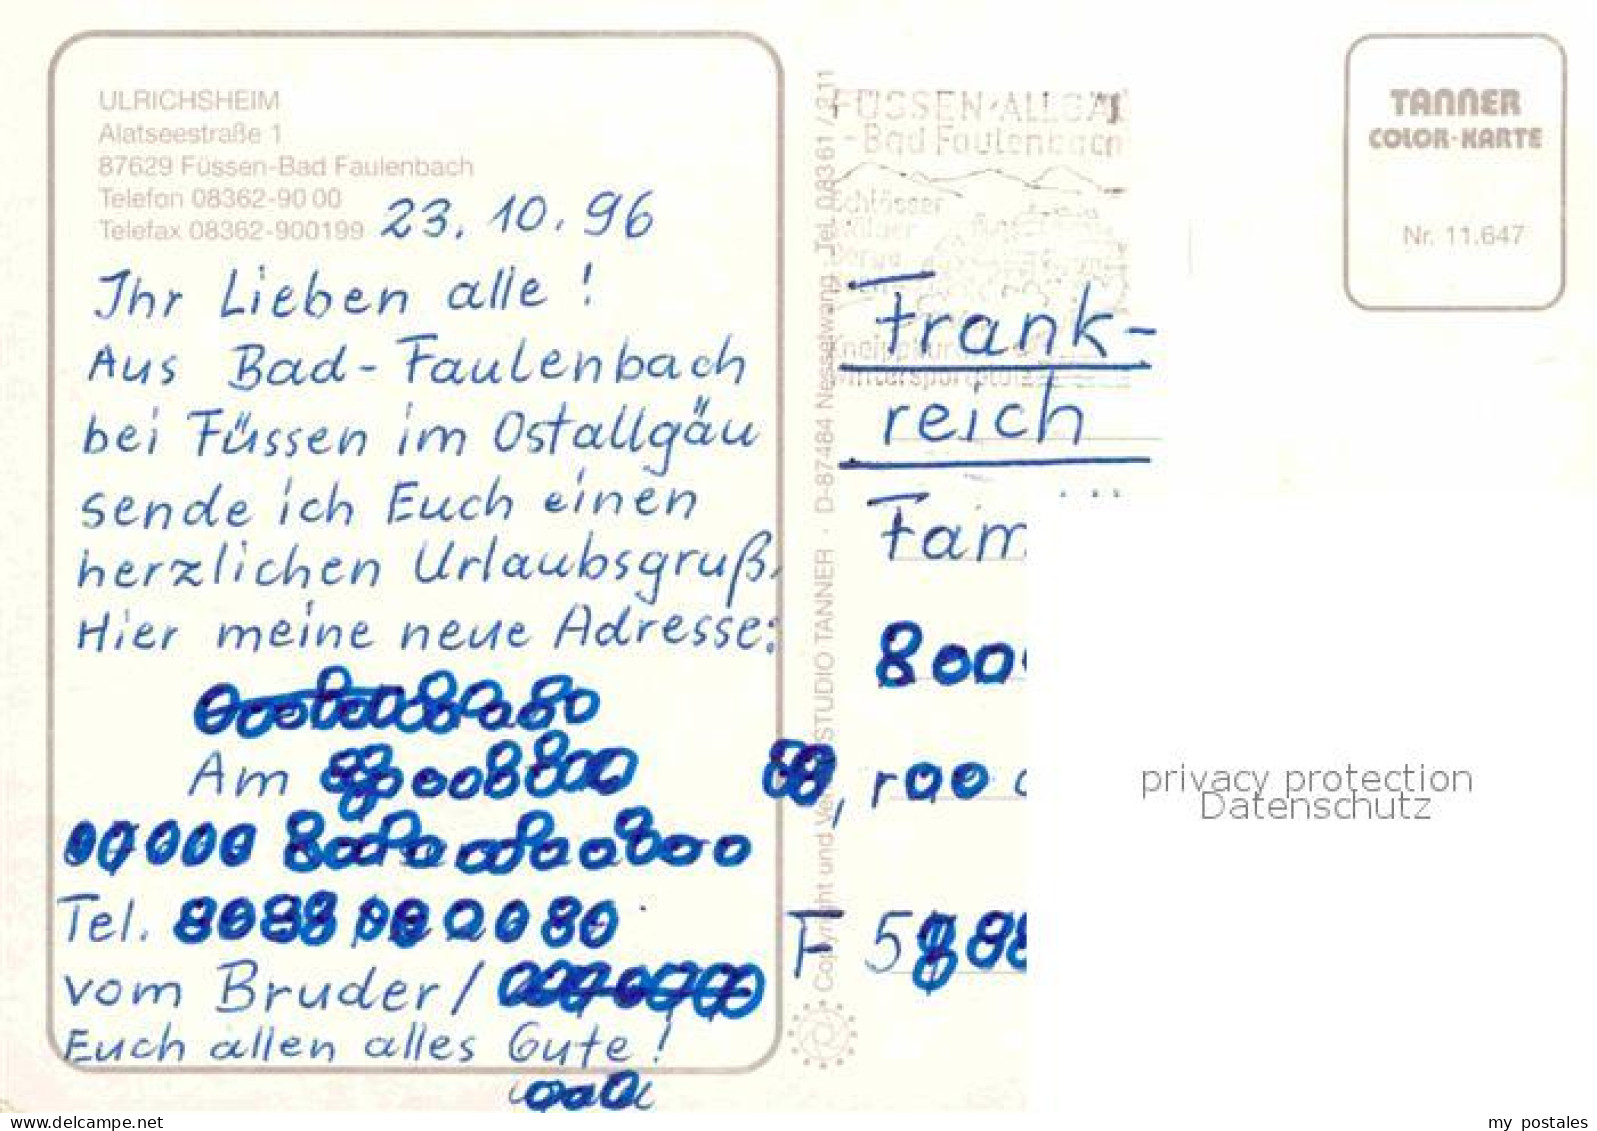 72667248 Bad Faulenbach Ulrichsheim Bad Faulenbach - Fuessen